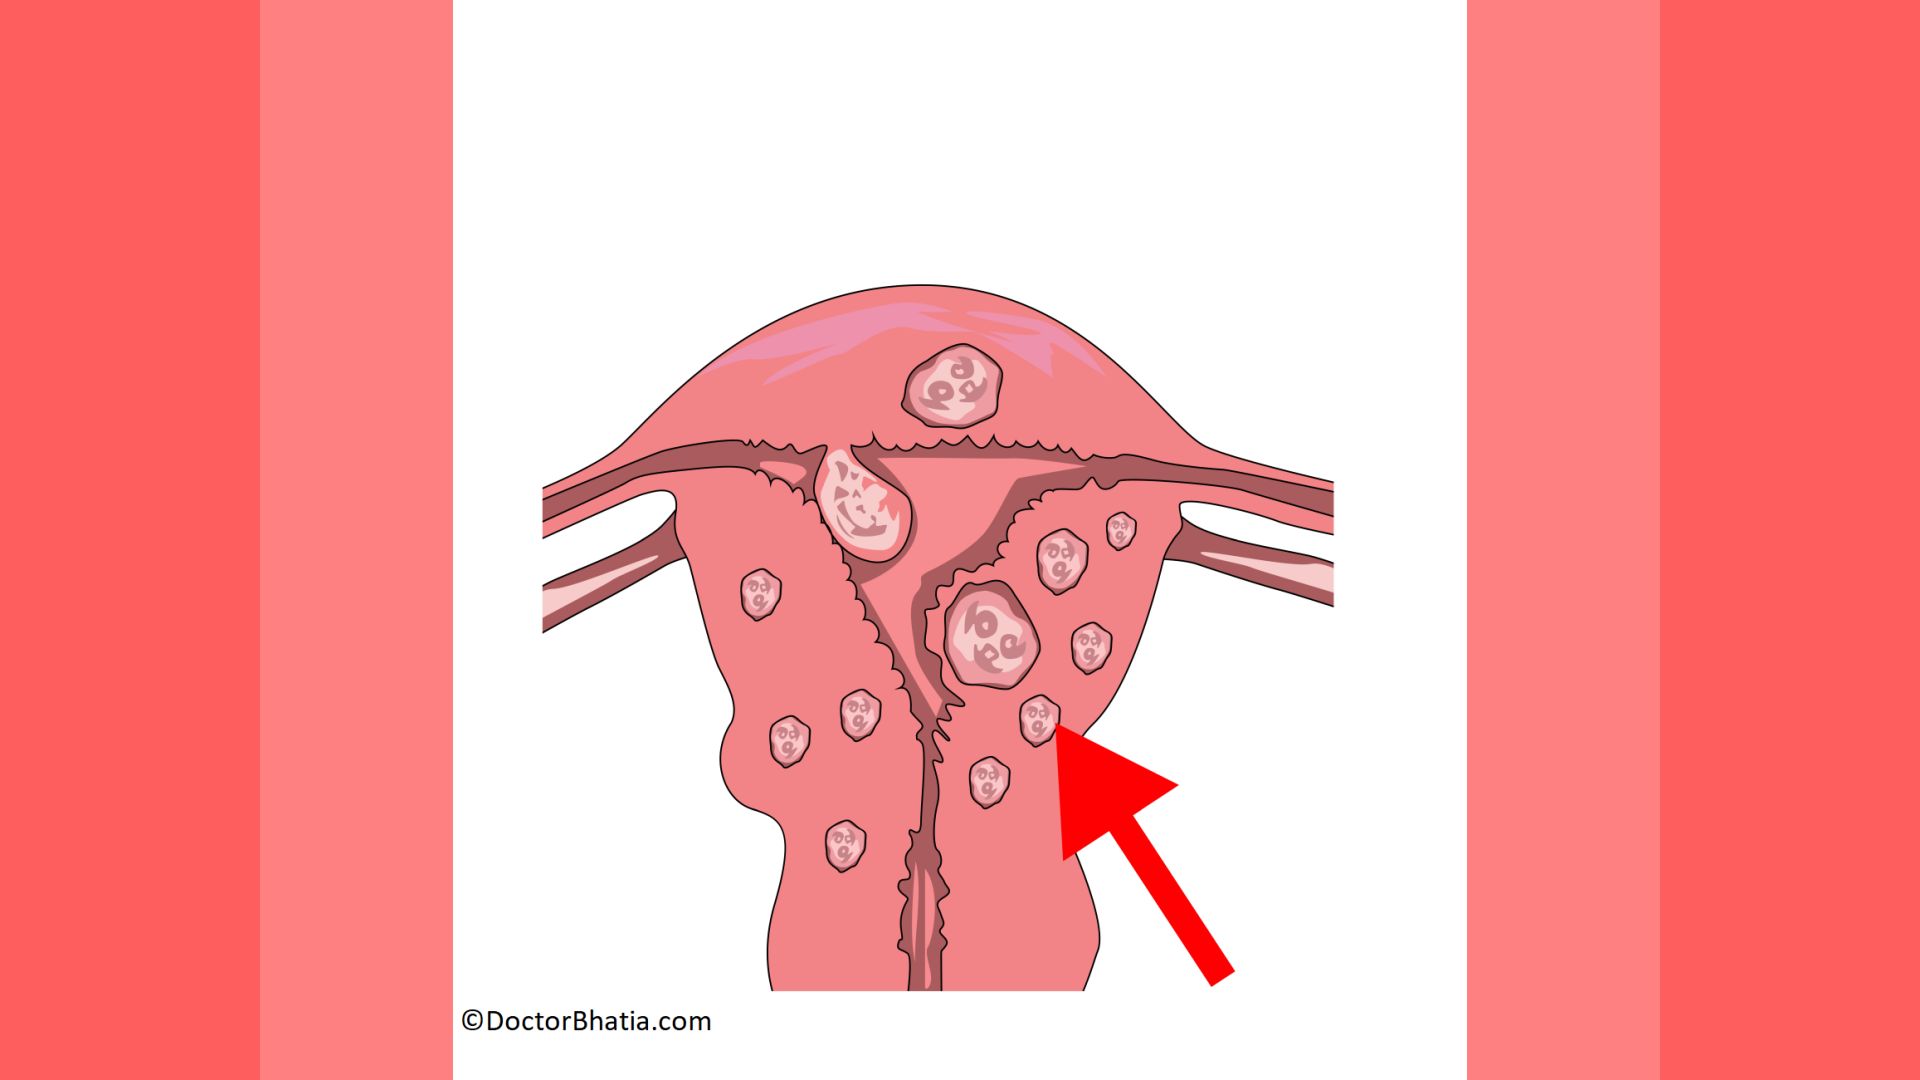 Menorrhagia and abnormal bleeding before the menopause - ScienceDirect